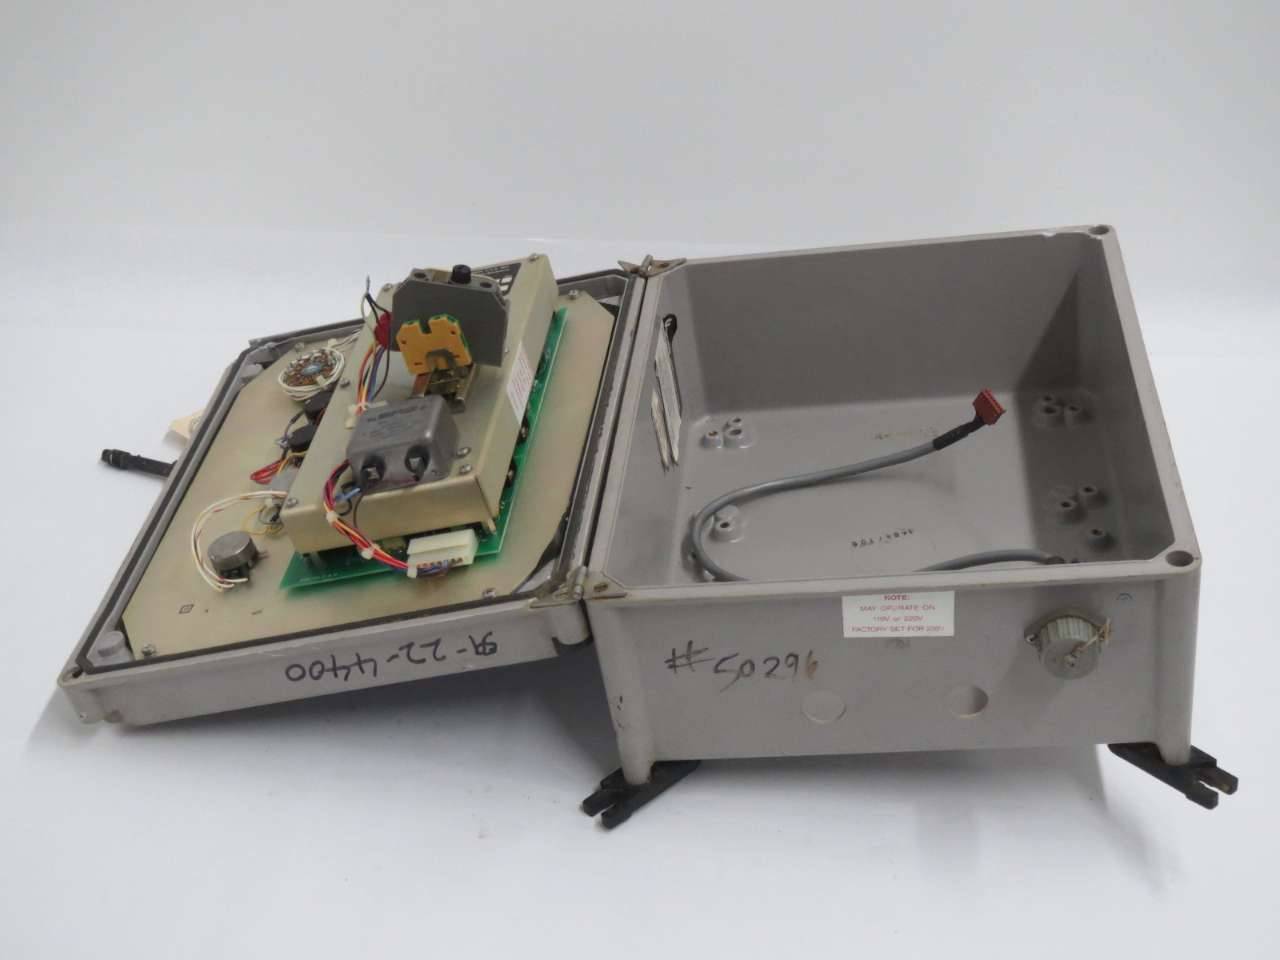 BTG EUR-Control 885-0512 OPTICON 115V-AC 230V-AC Consistency Transmitter D582785 